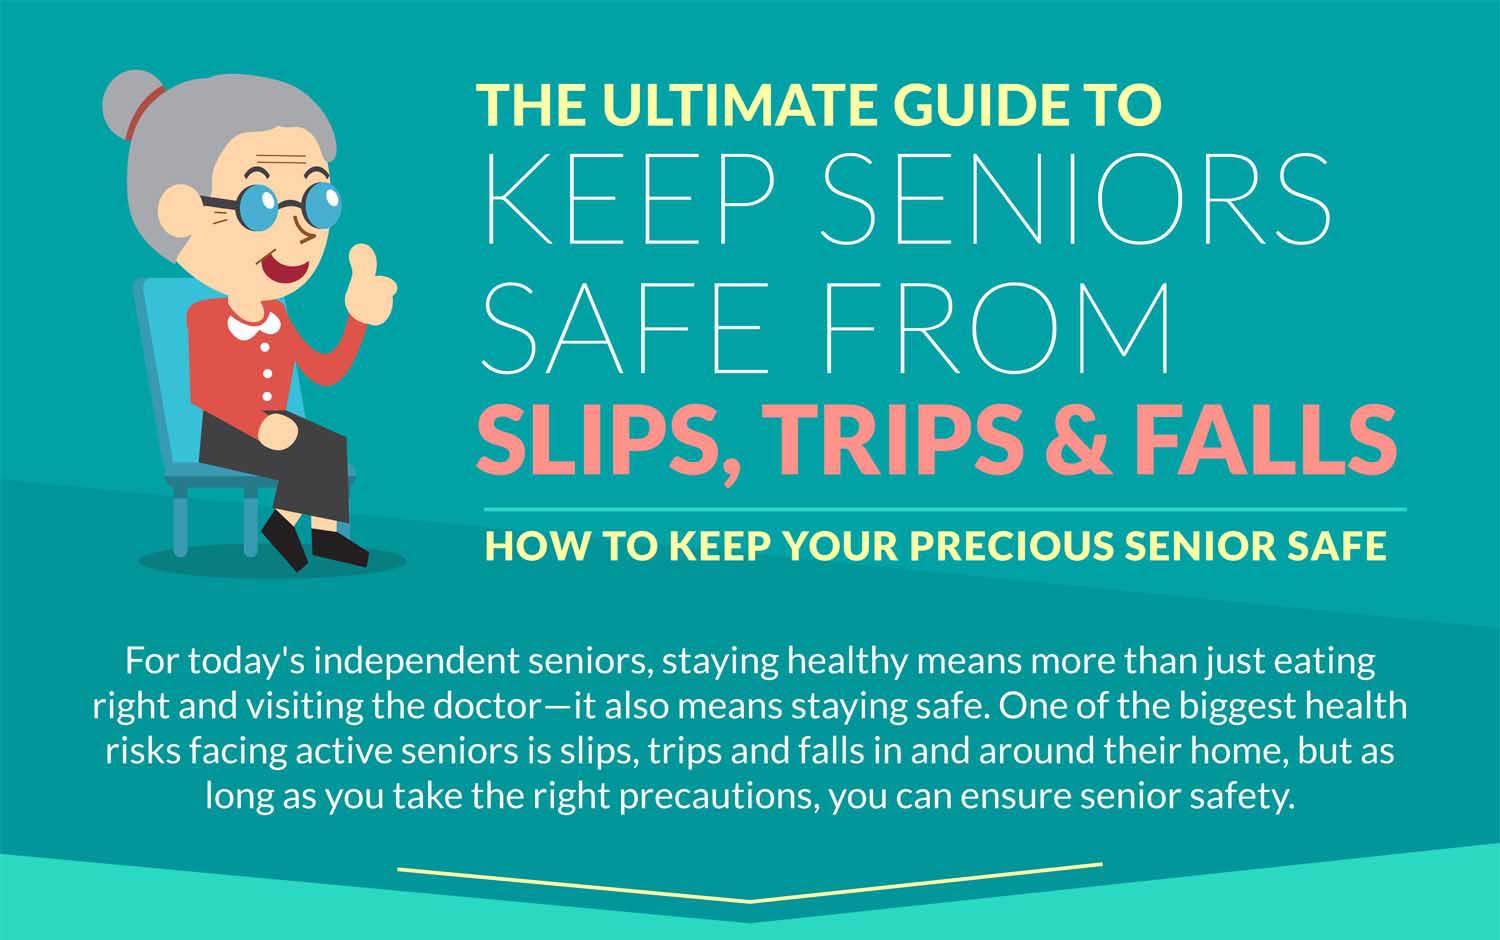 Keep Seniors Safe From Slips, trips & Falls